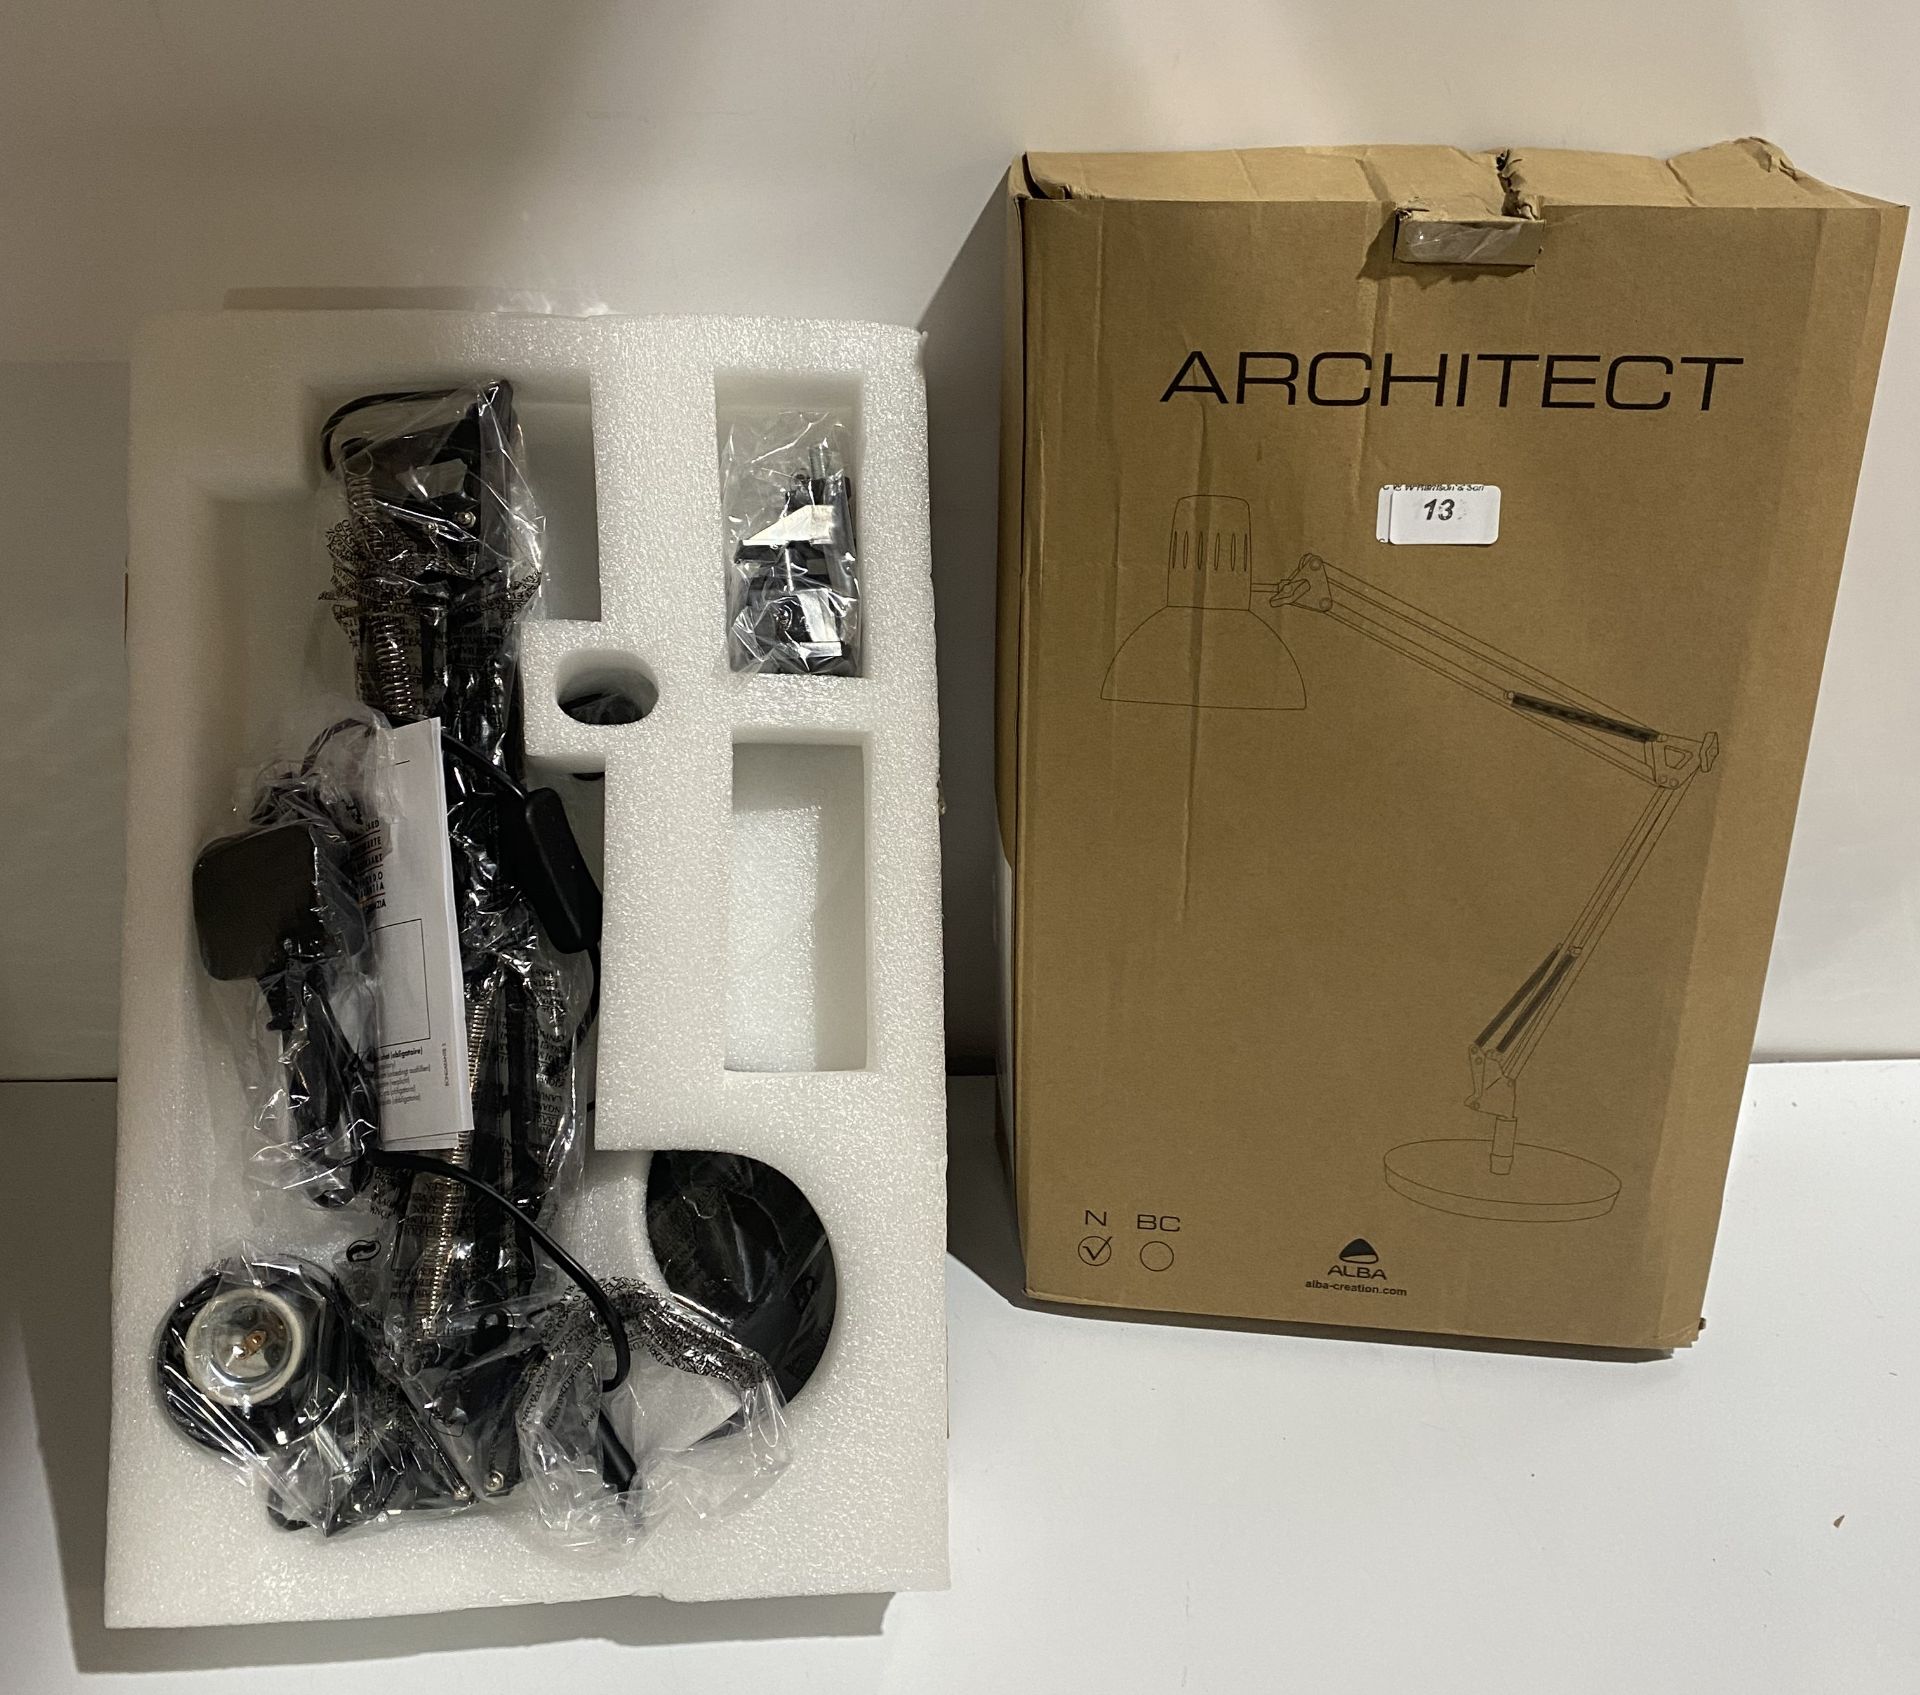 1 x new boxed Alba architect double arm metal black desk lamp (saleroom location: H12)